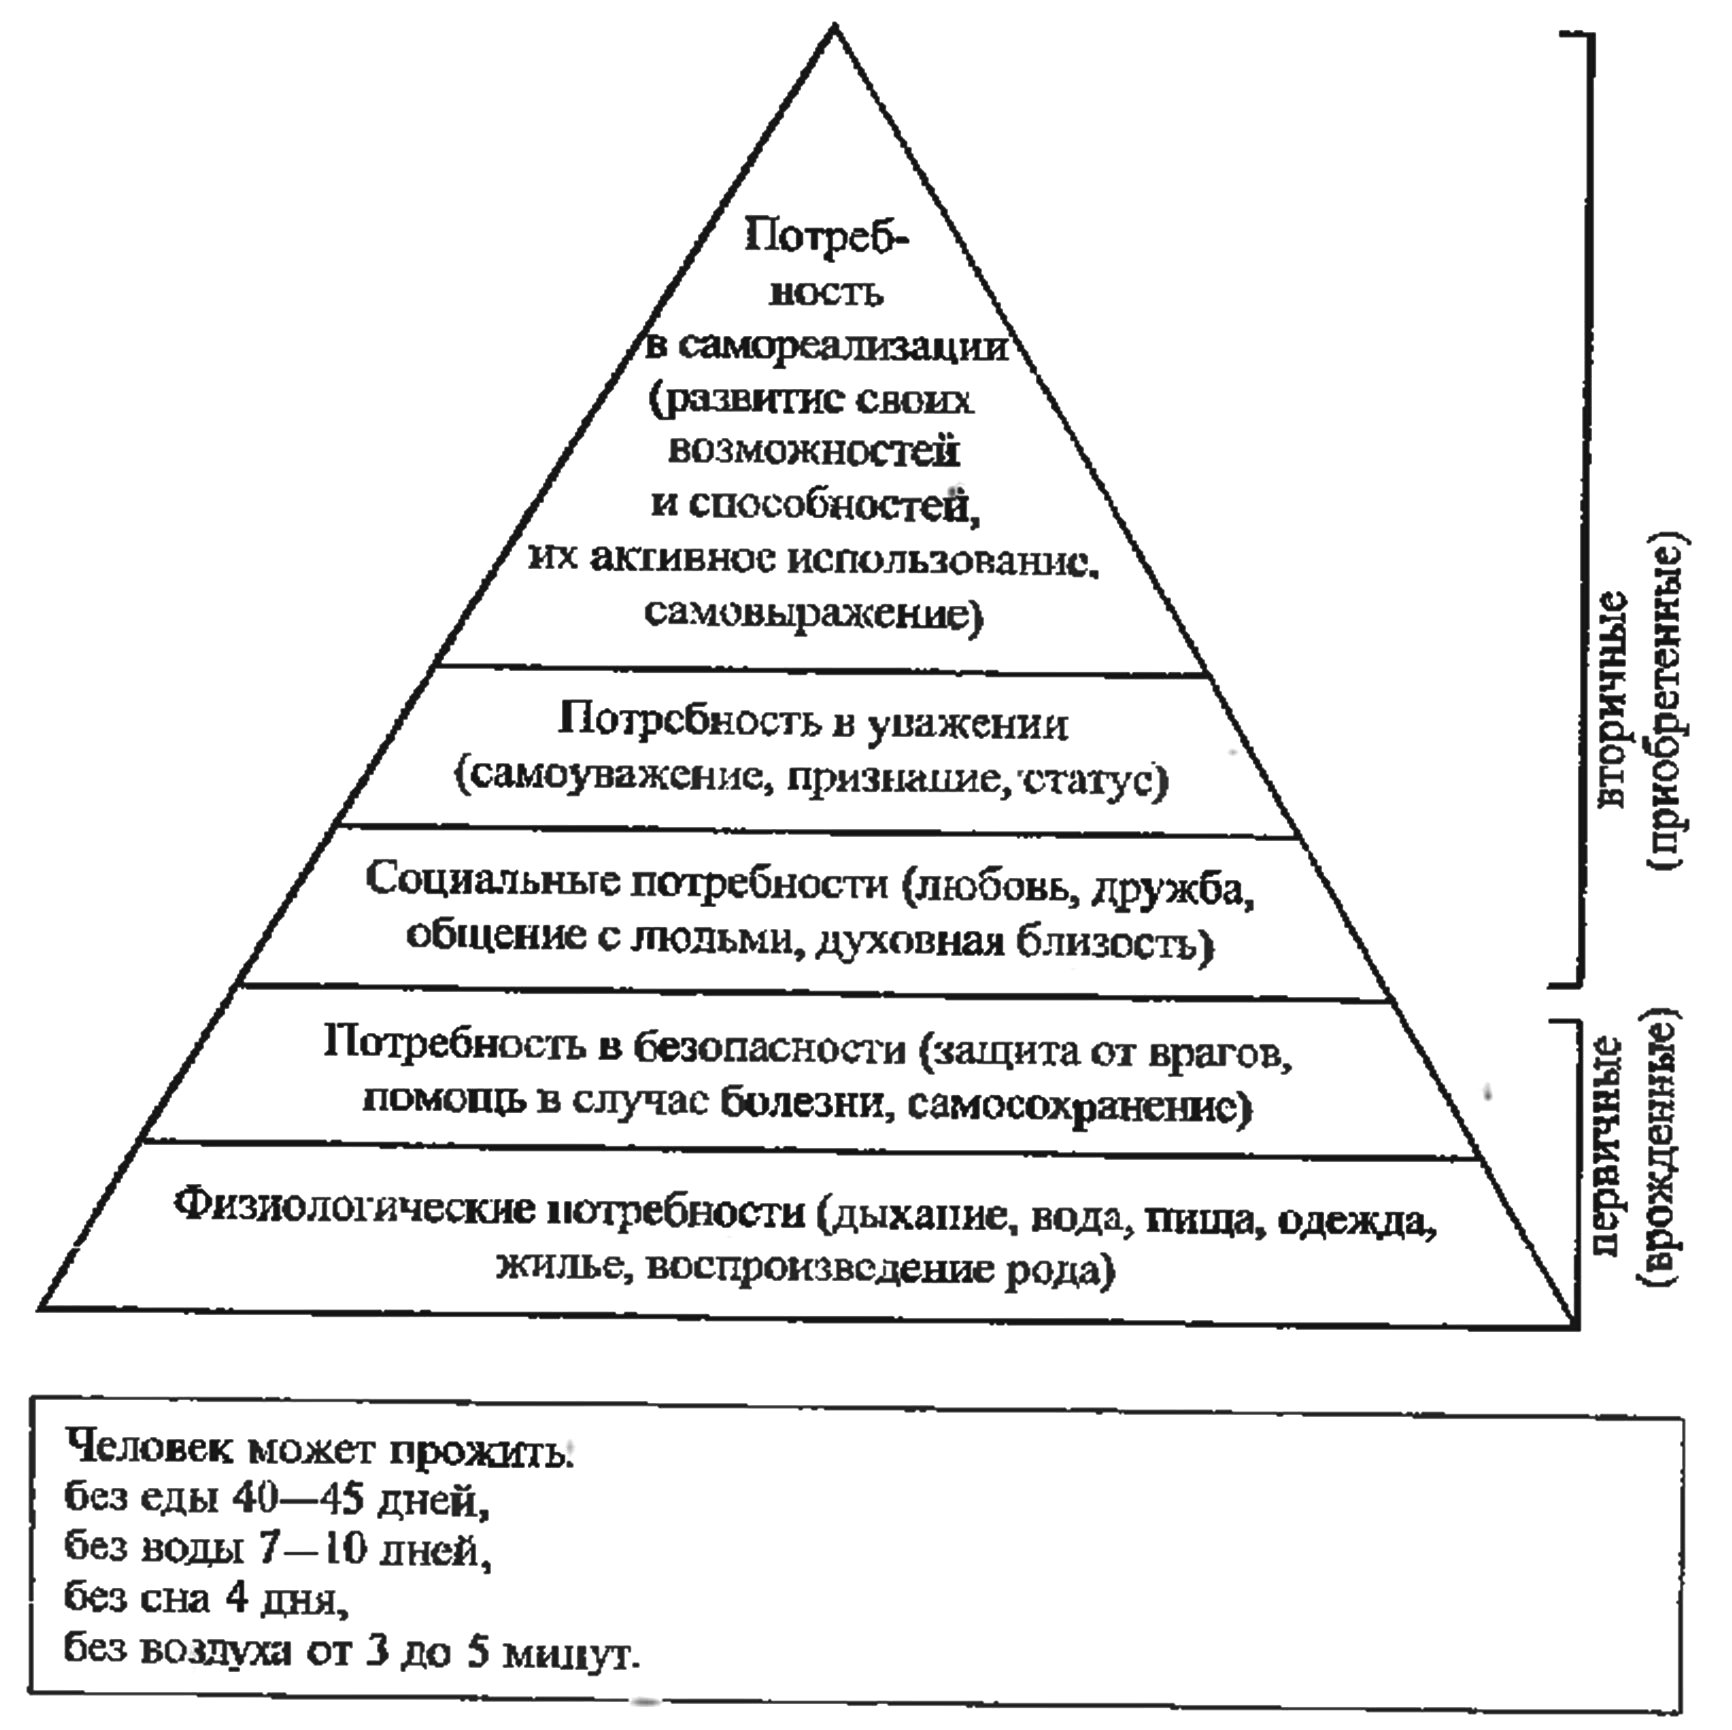 Пирамида потребностей, по А. Маслоу